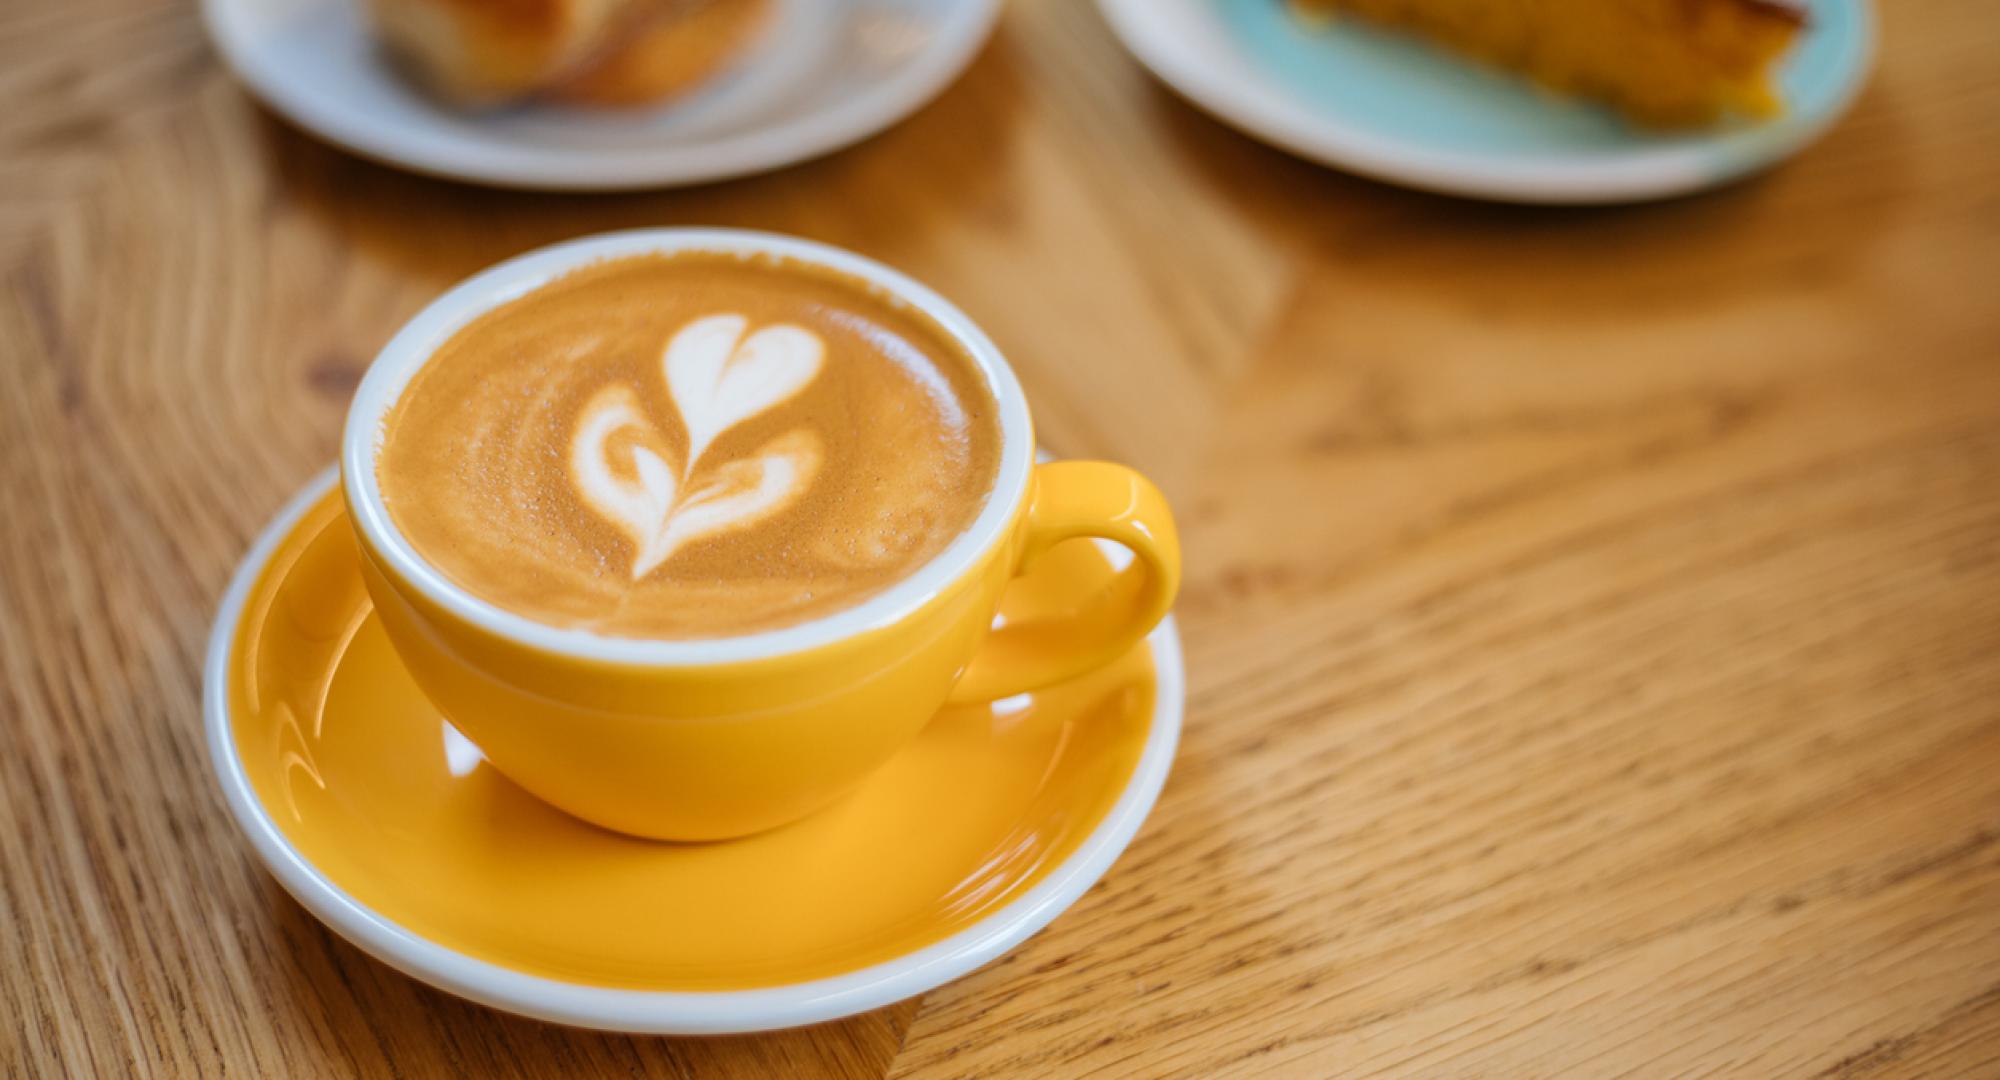 Decaffeinated coffee saving the NHS £85m